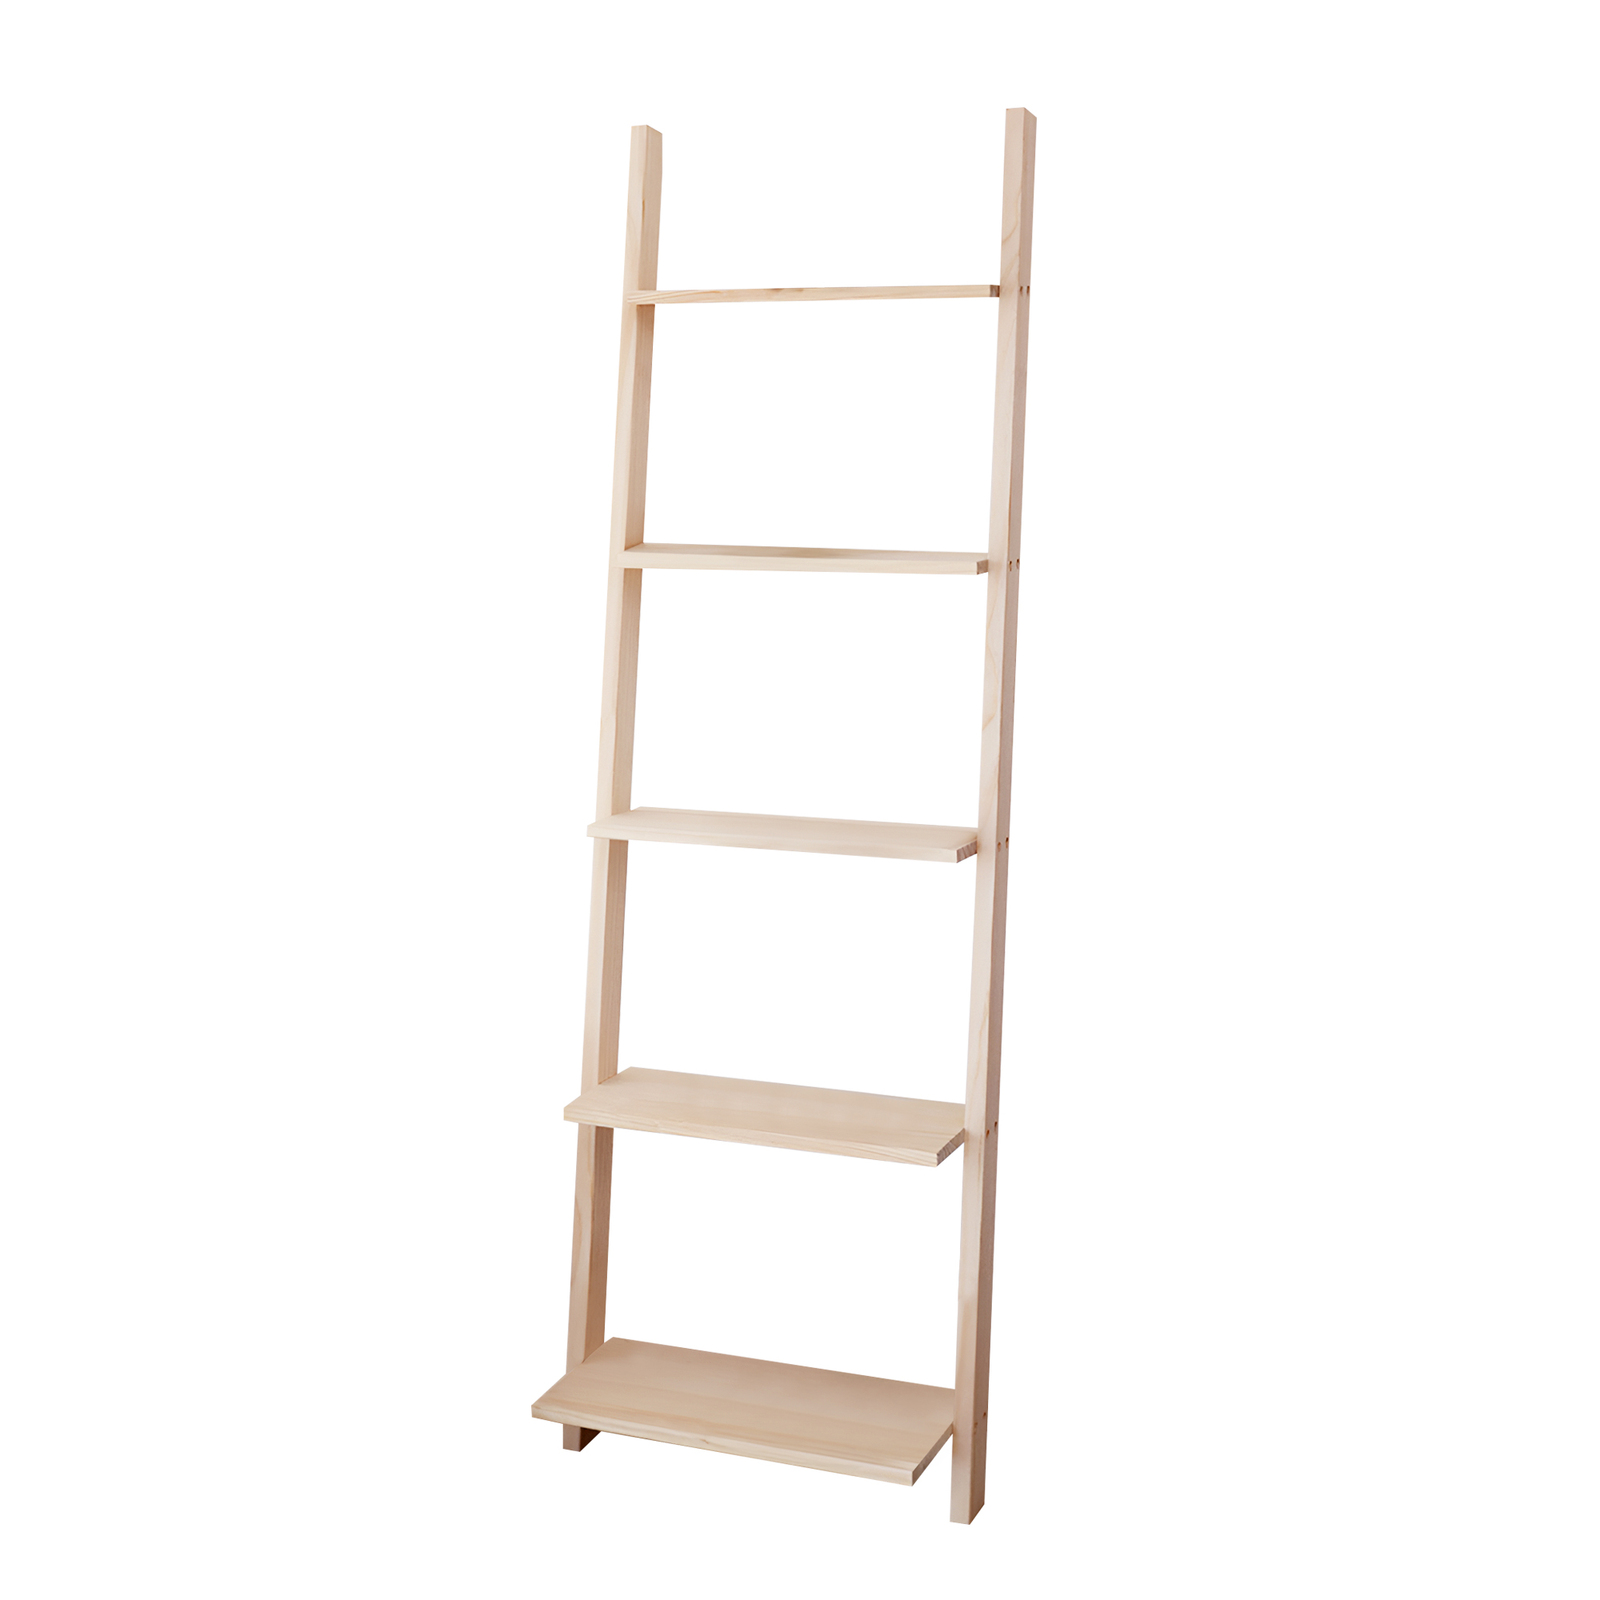 160cm Ladder Shelf Wooden Display Storage Stand Rack Bookshelf Plant Stand